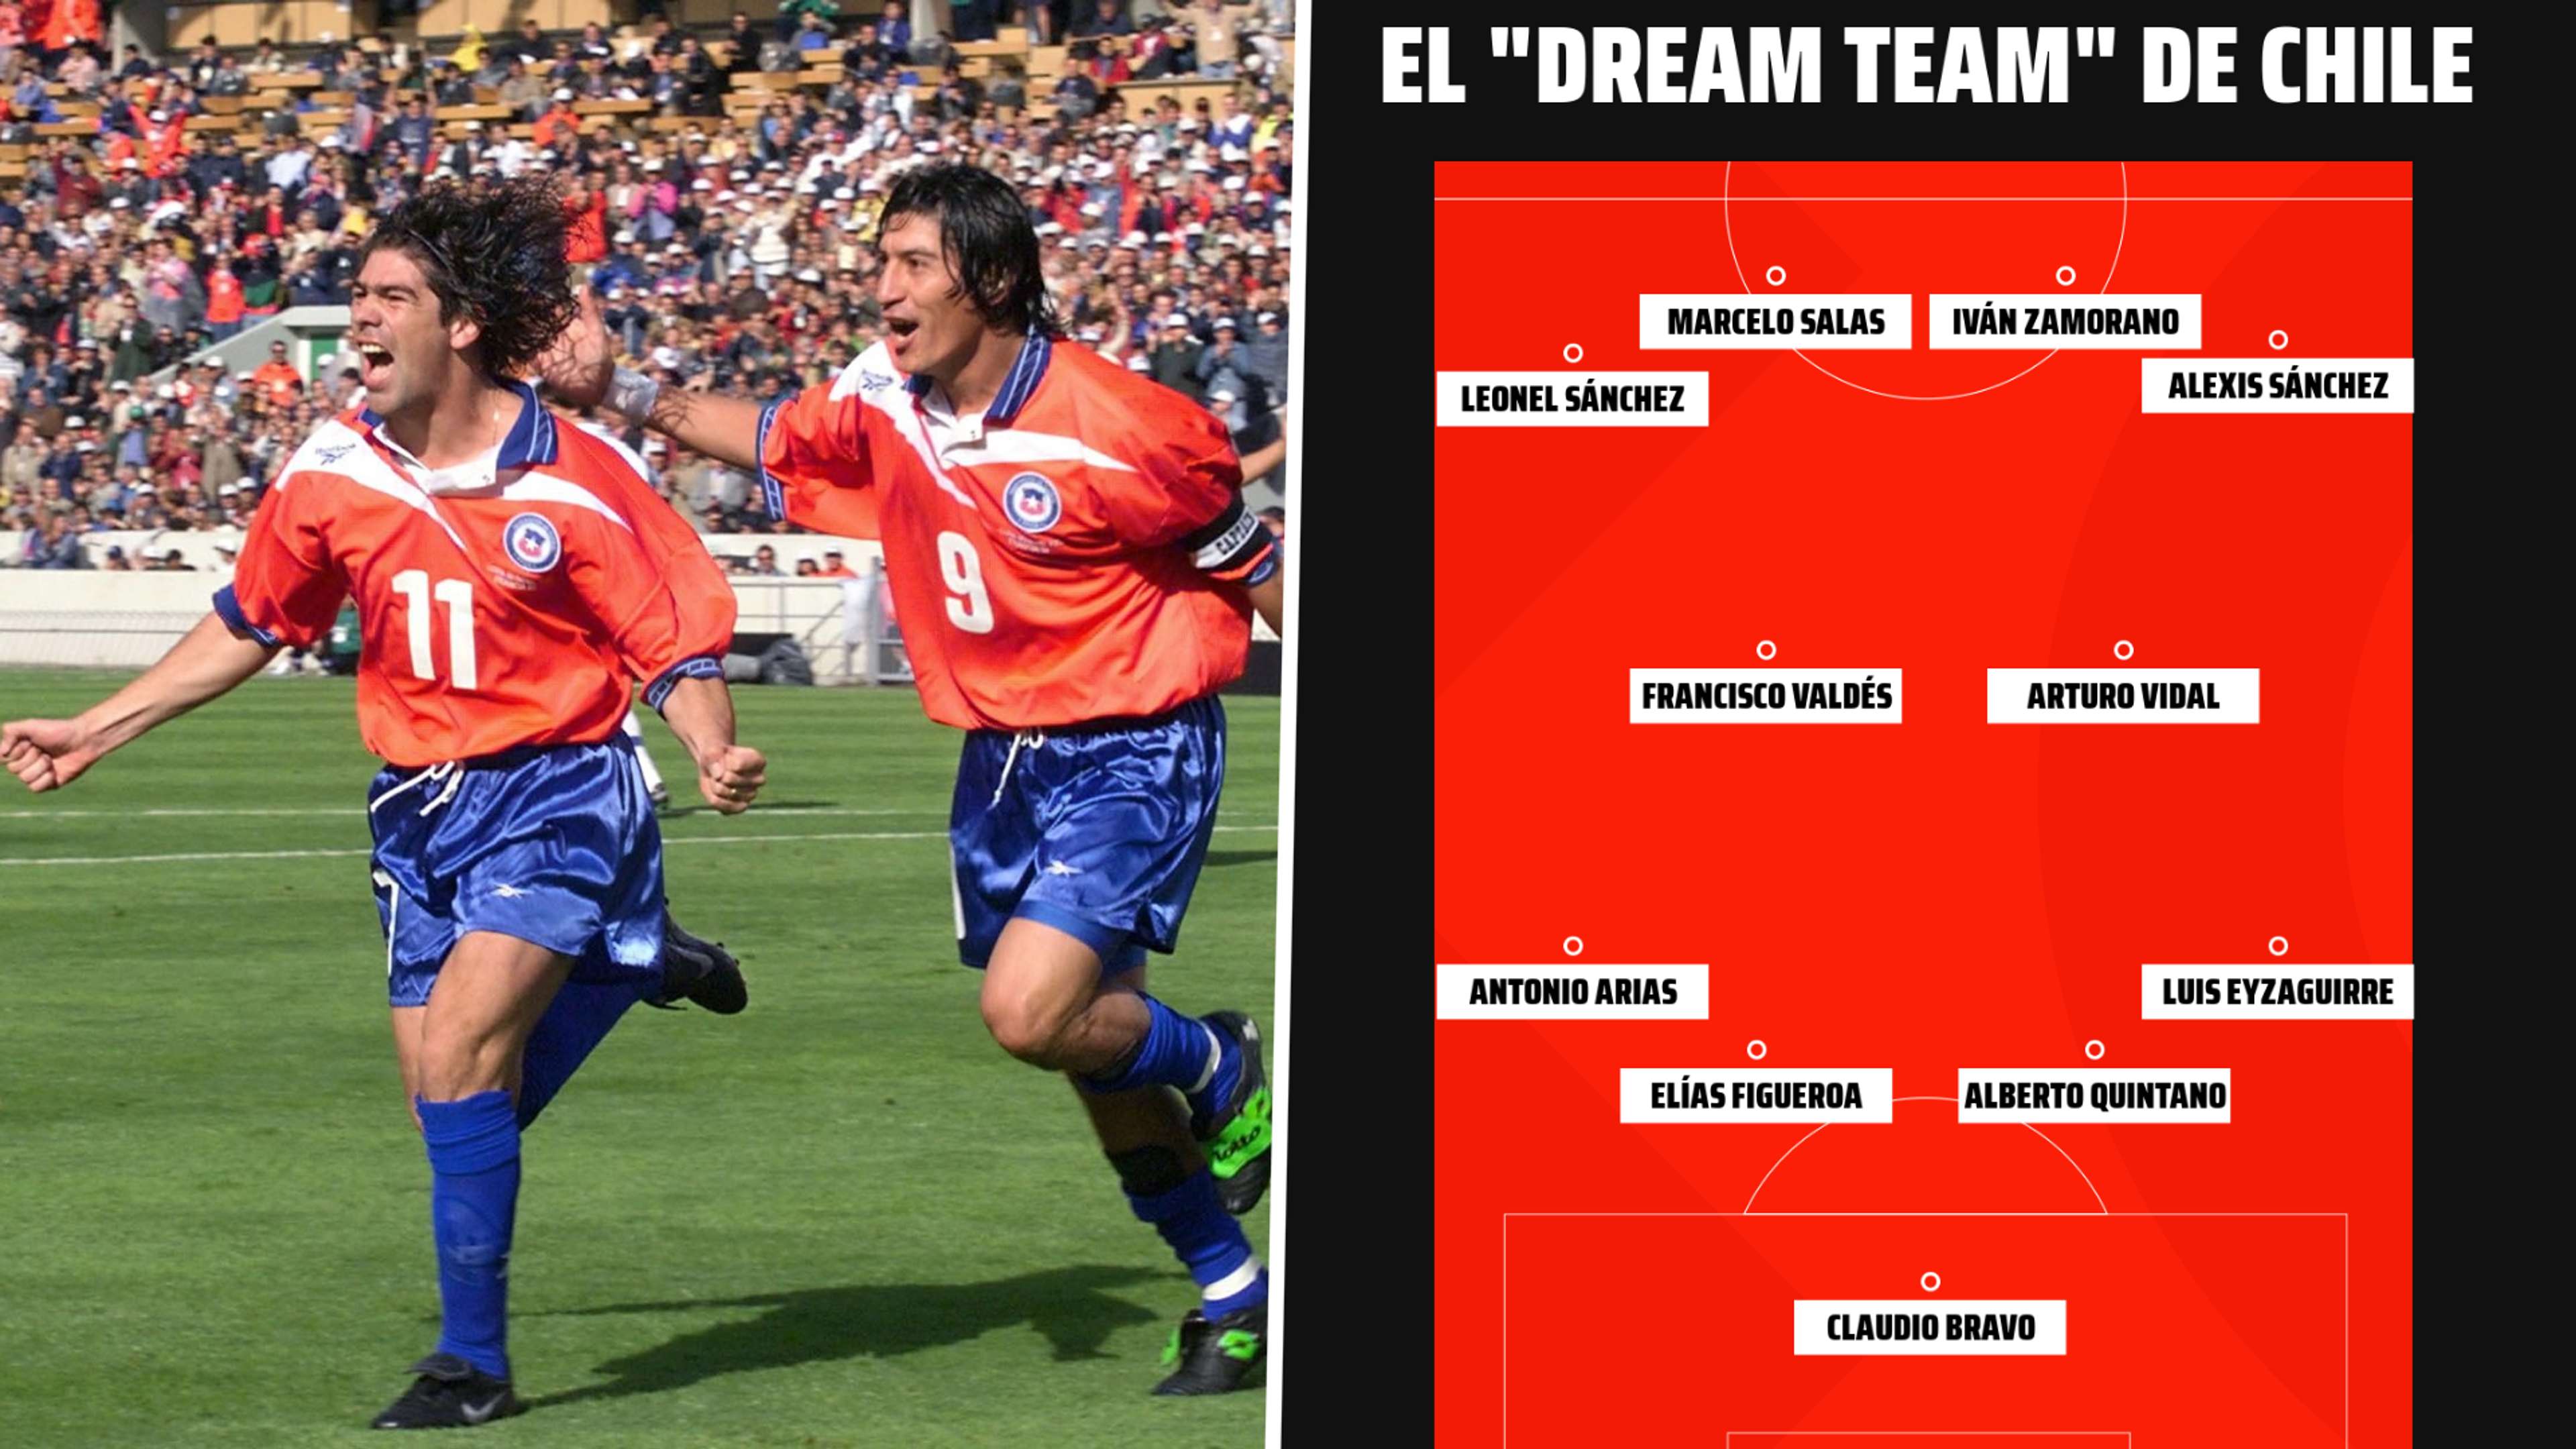 Chile "Dream Team"